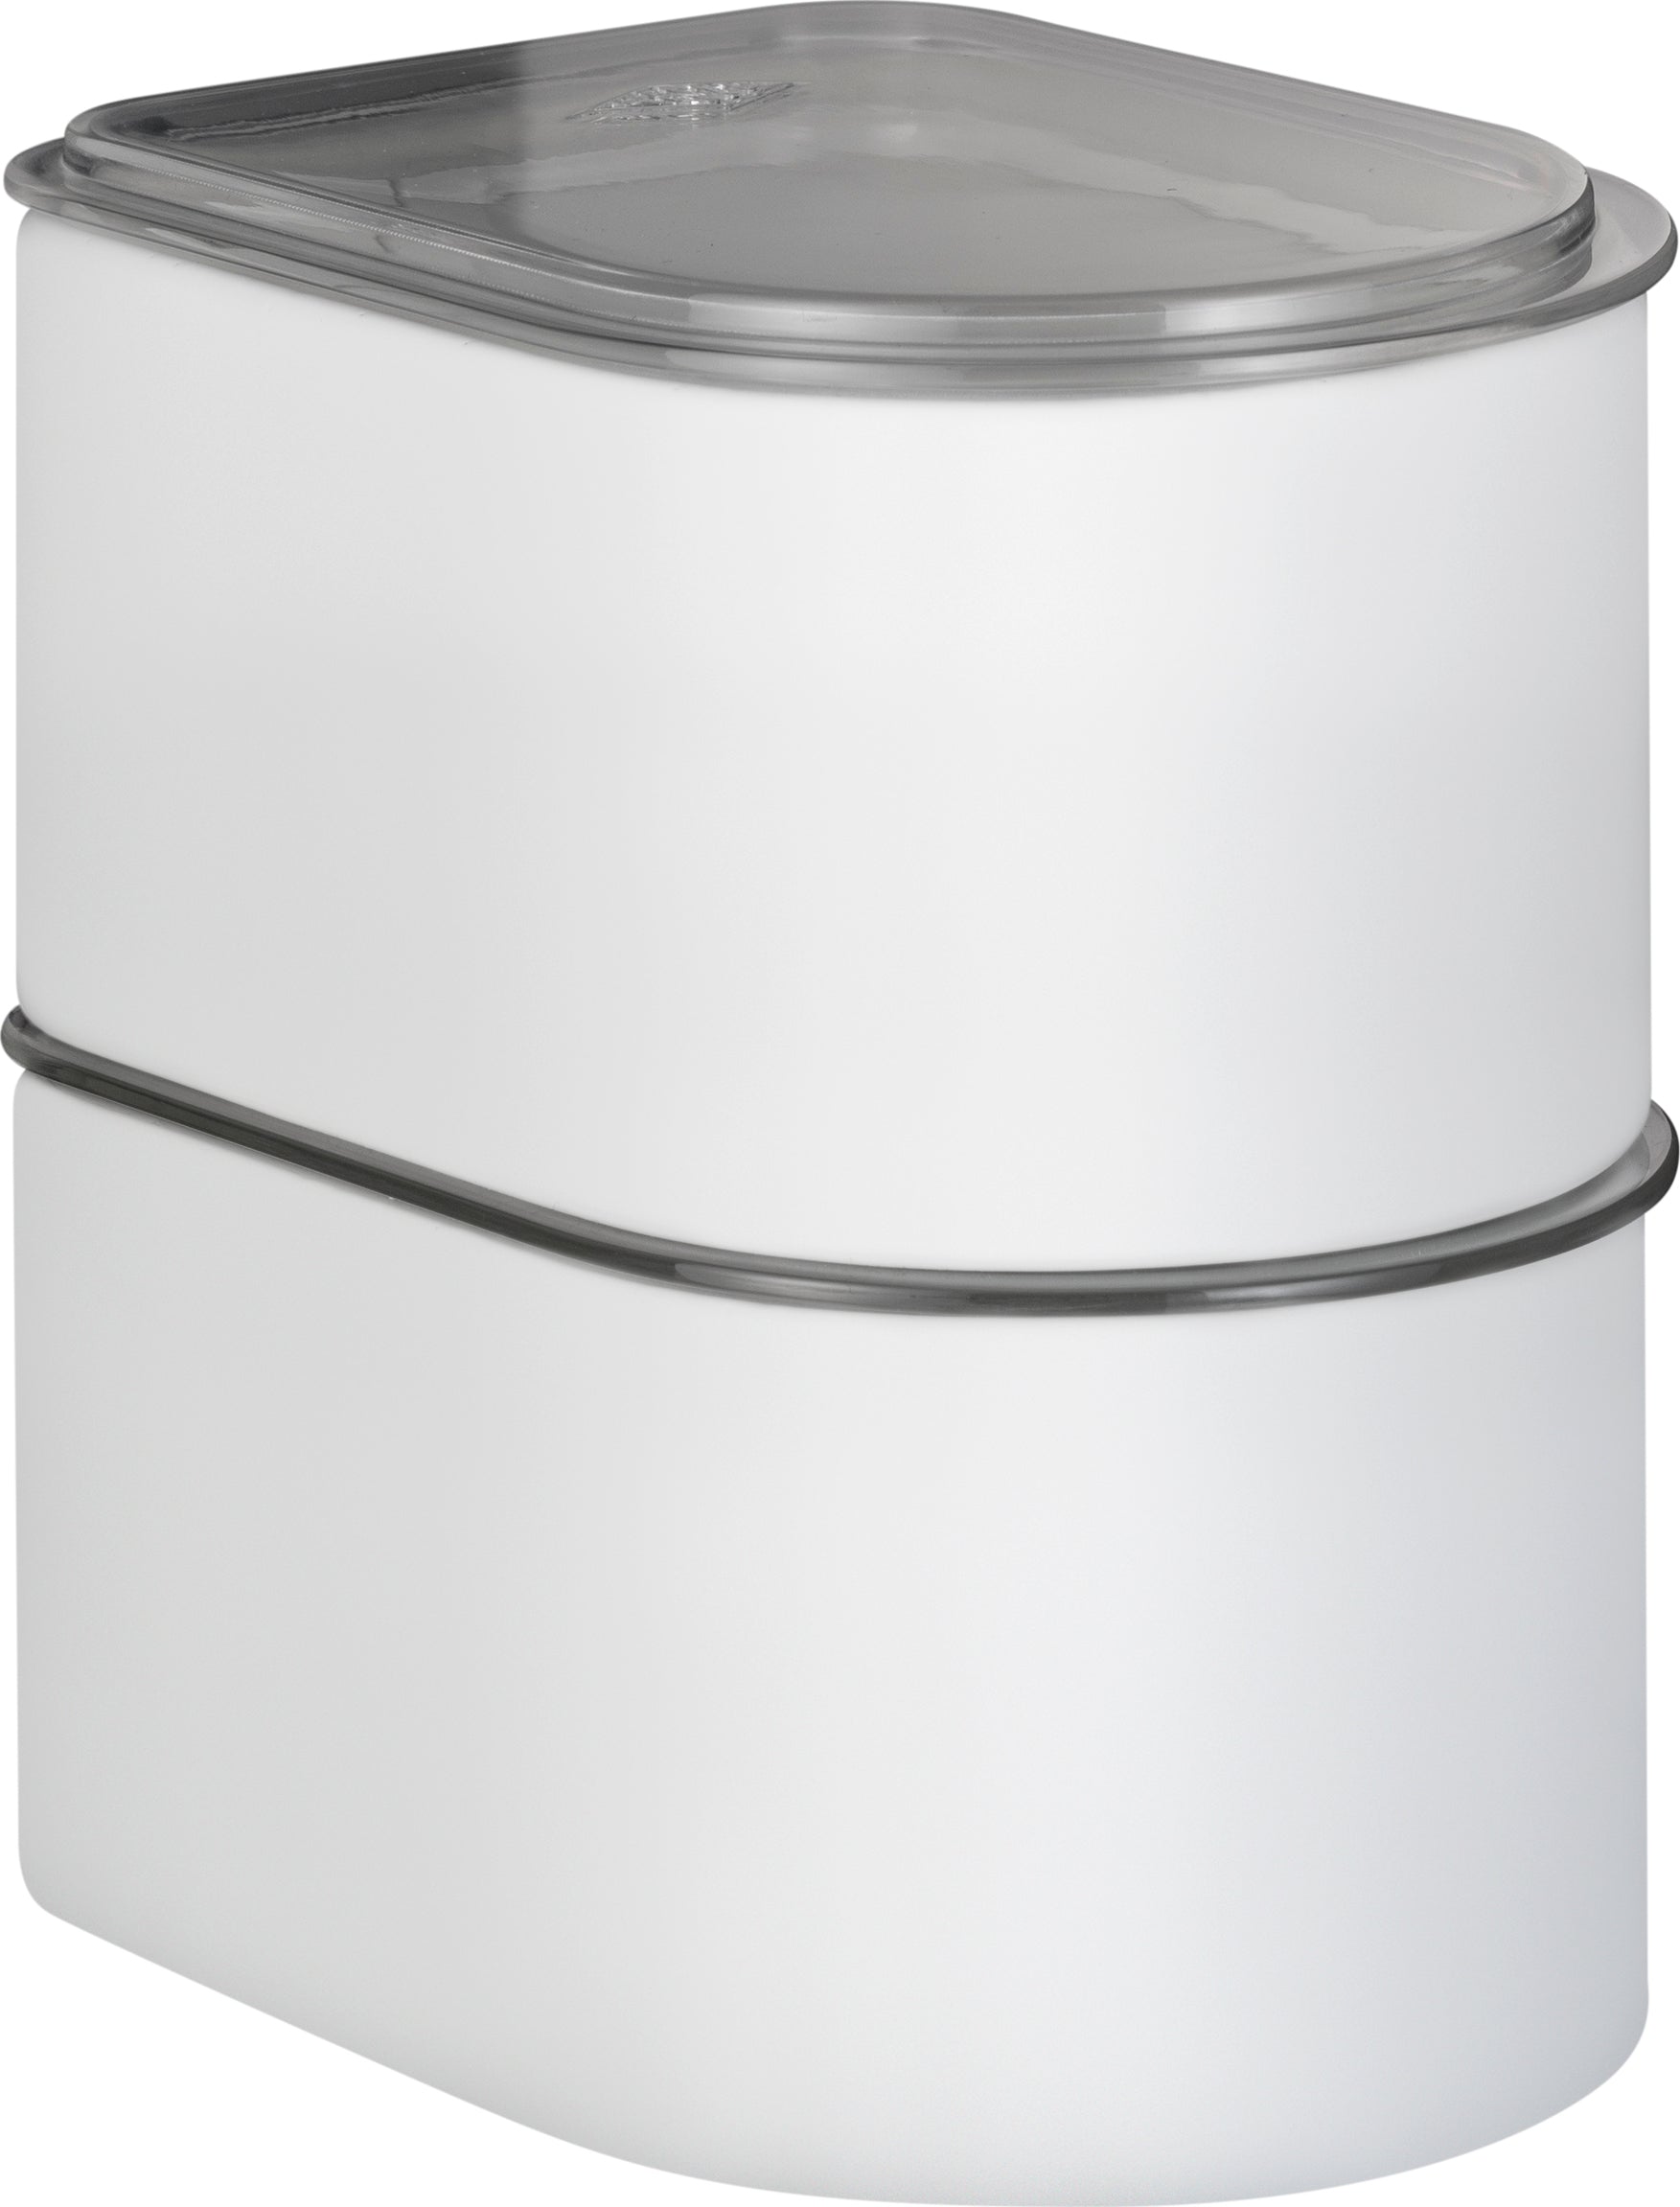 Wesco Canister 1 litro con tapa acrílica, Graphite Matt